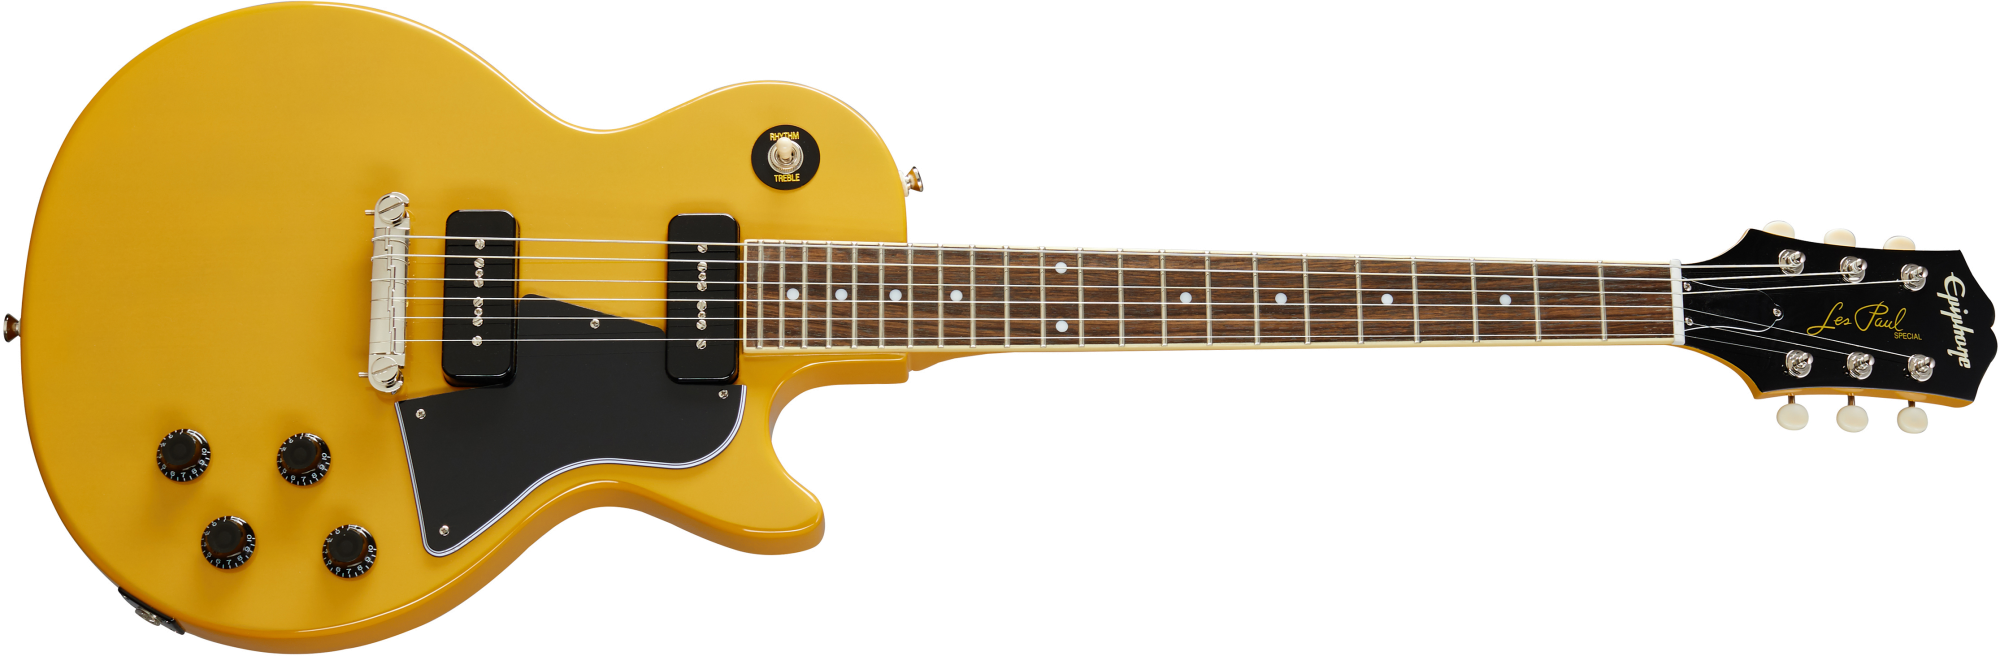 Billede af Epiphone Les Paul Special El-guitar (TV Yellow)